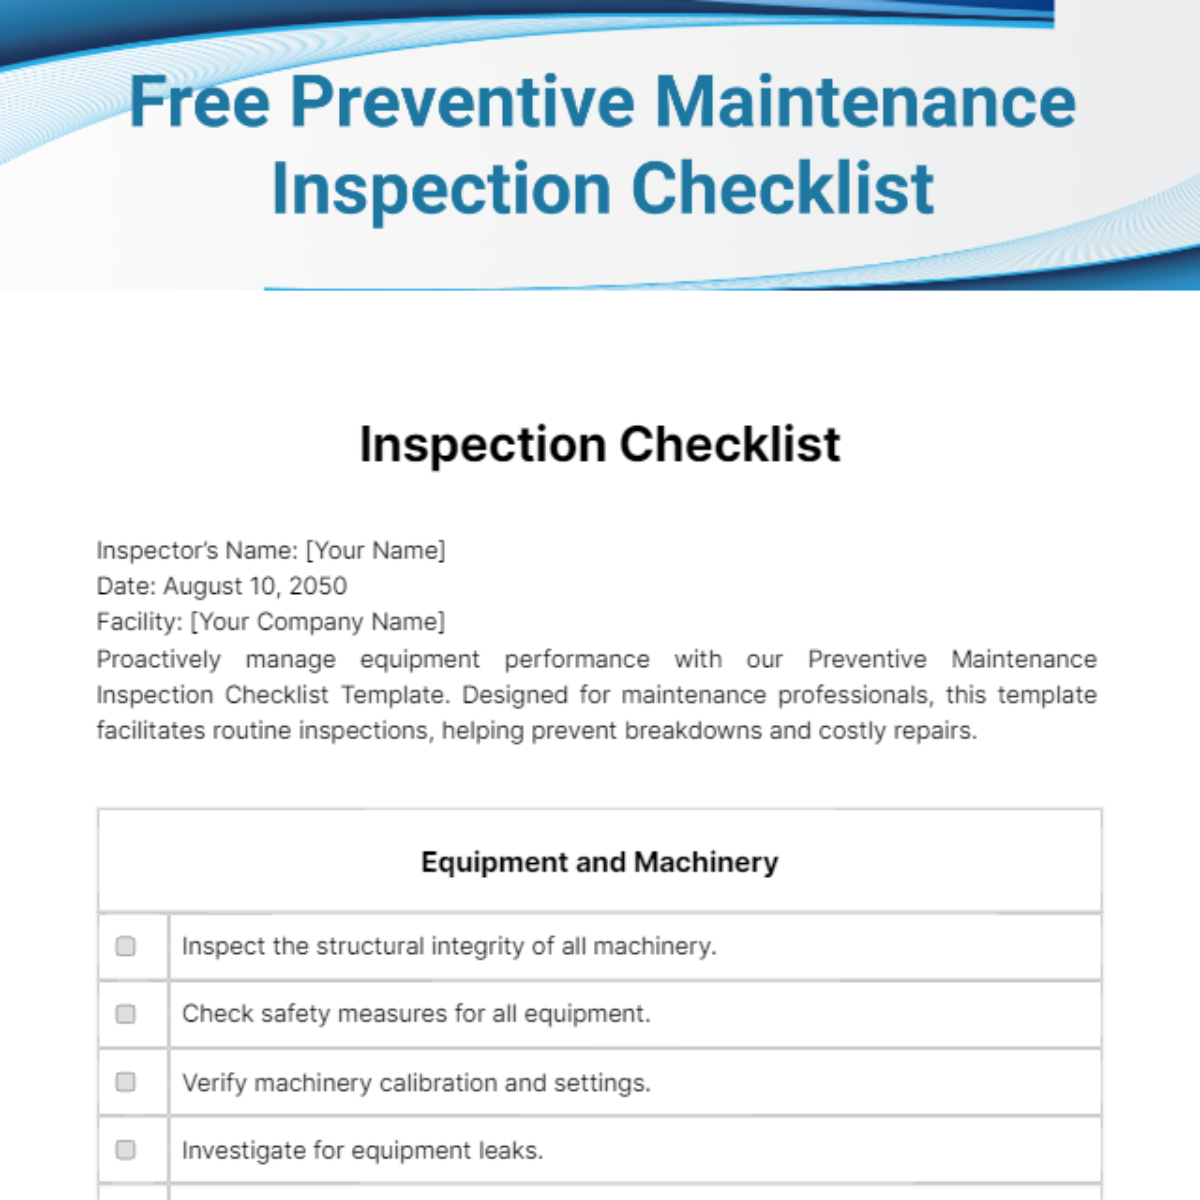 Free Preventive Maintenance Inspection Checklist Template